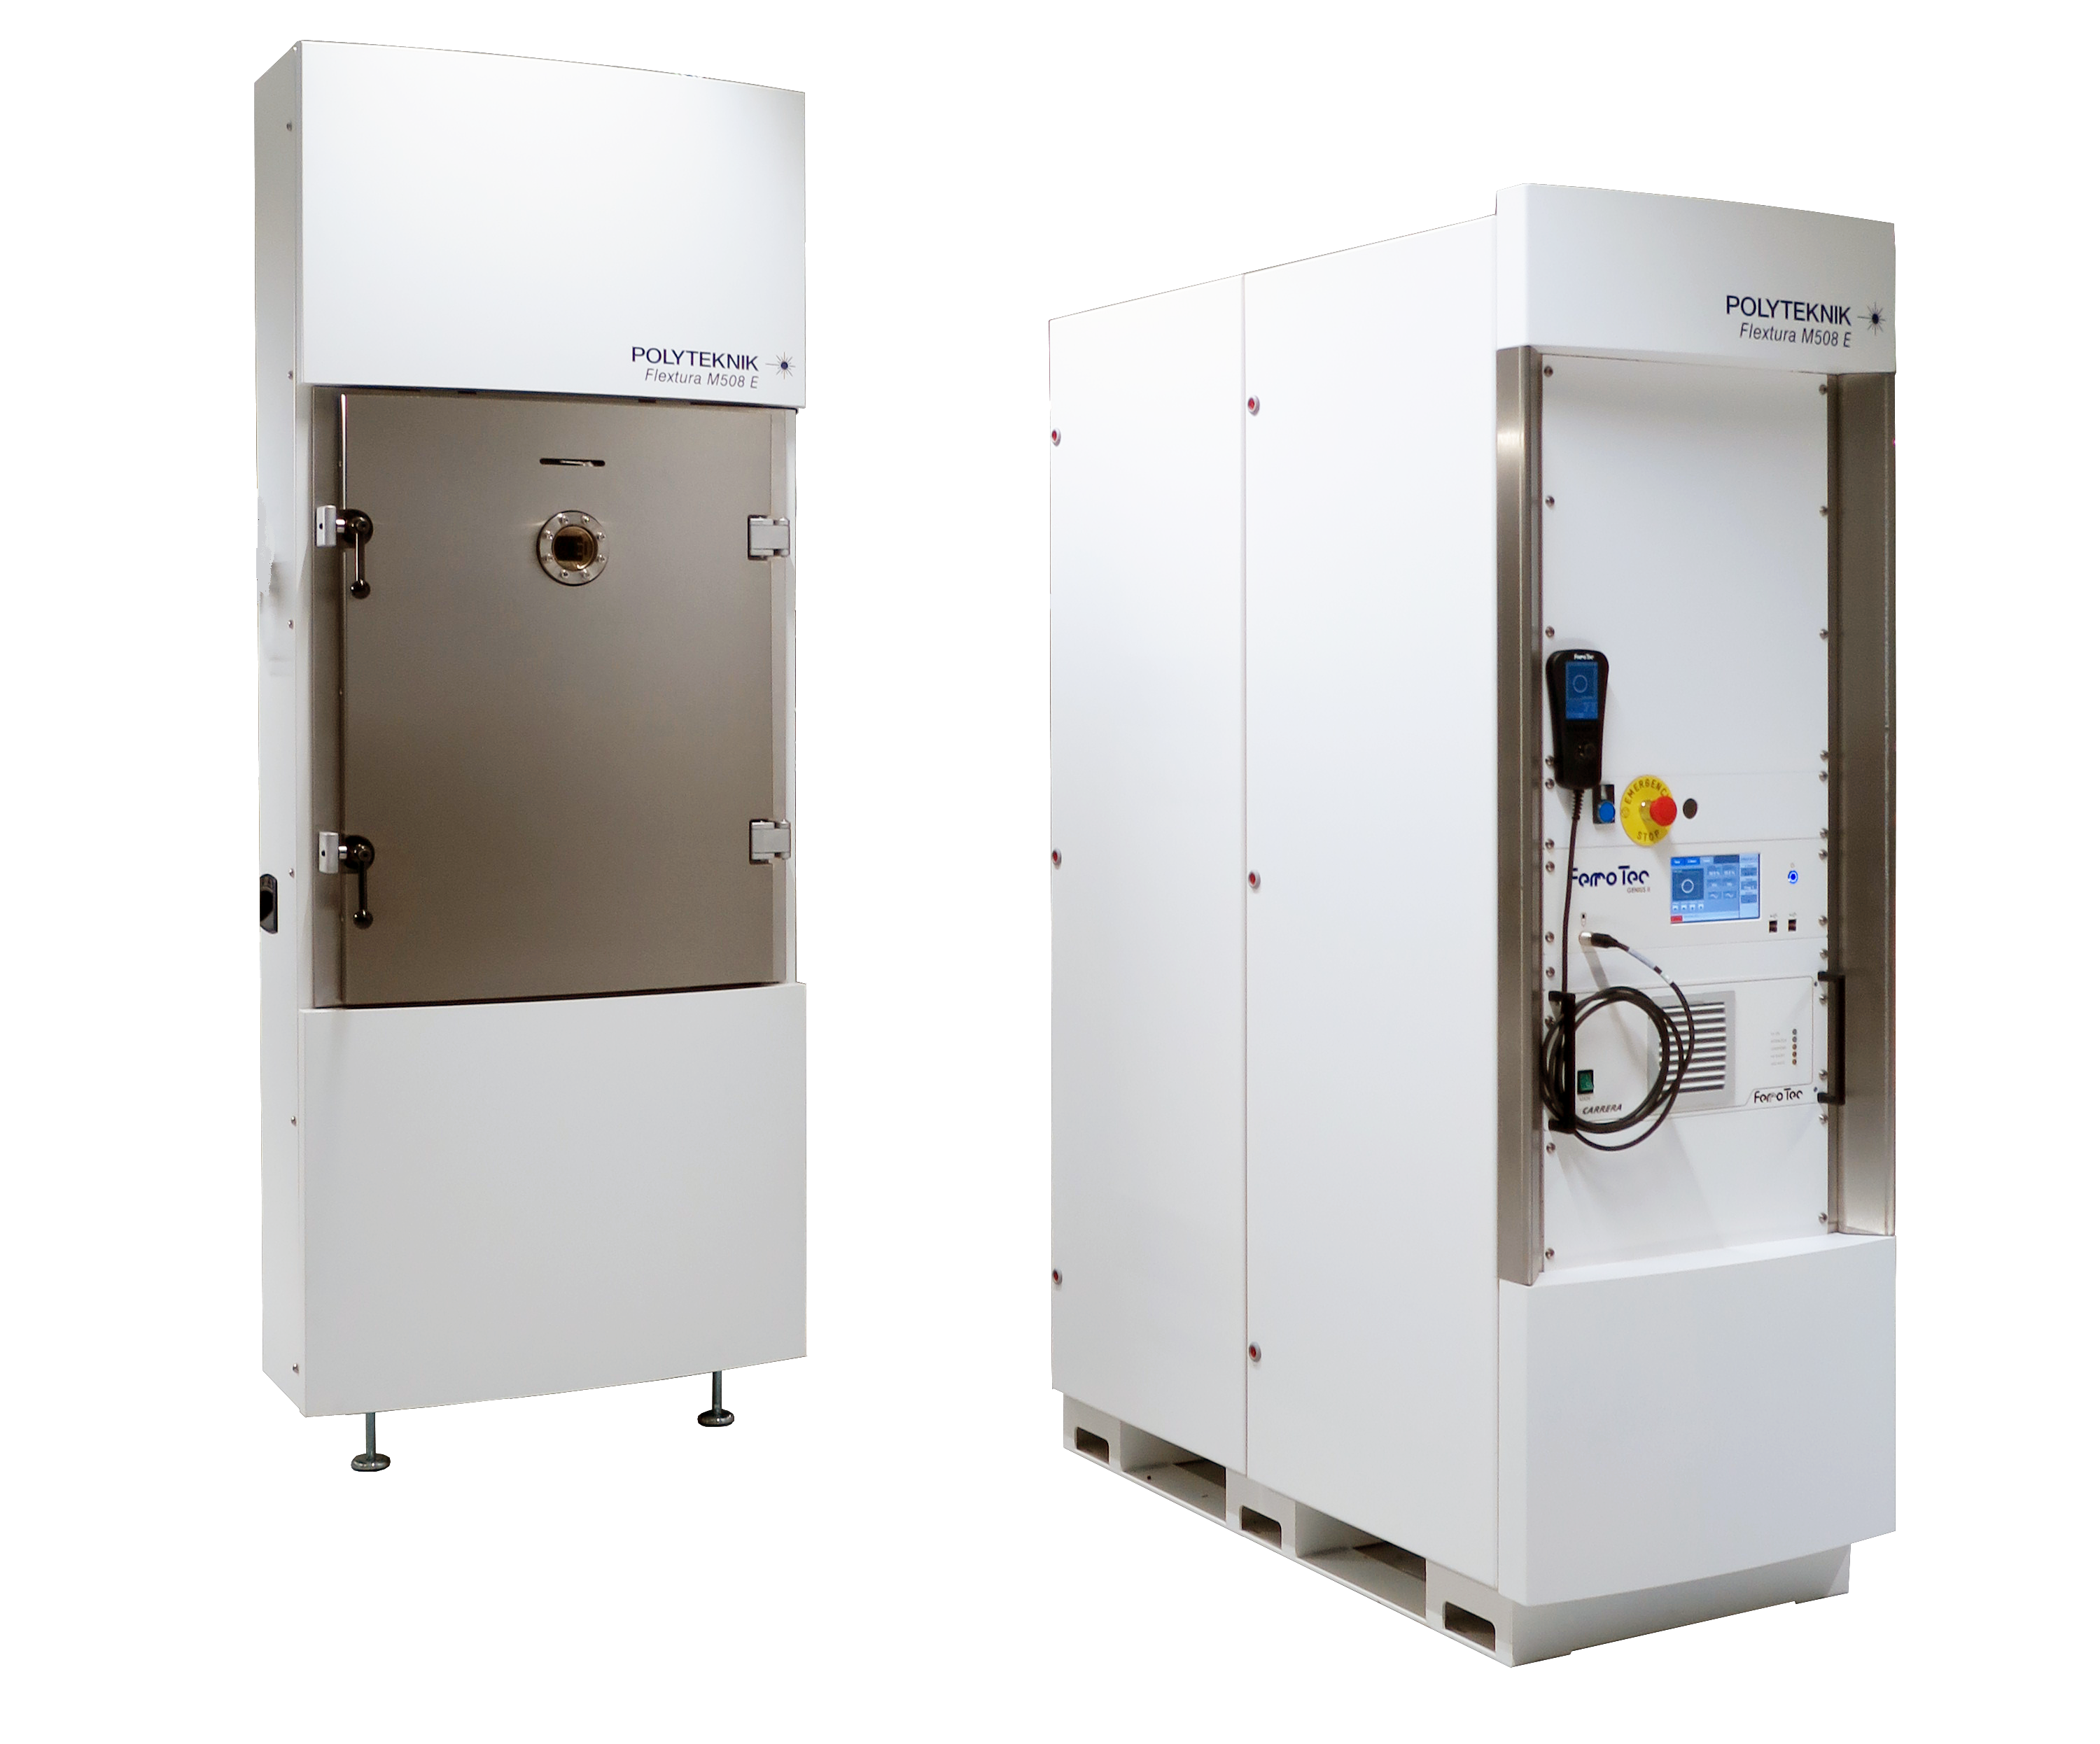 Flextura evaporator batch module with control cabinet Polyteknik AS PVD system